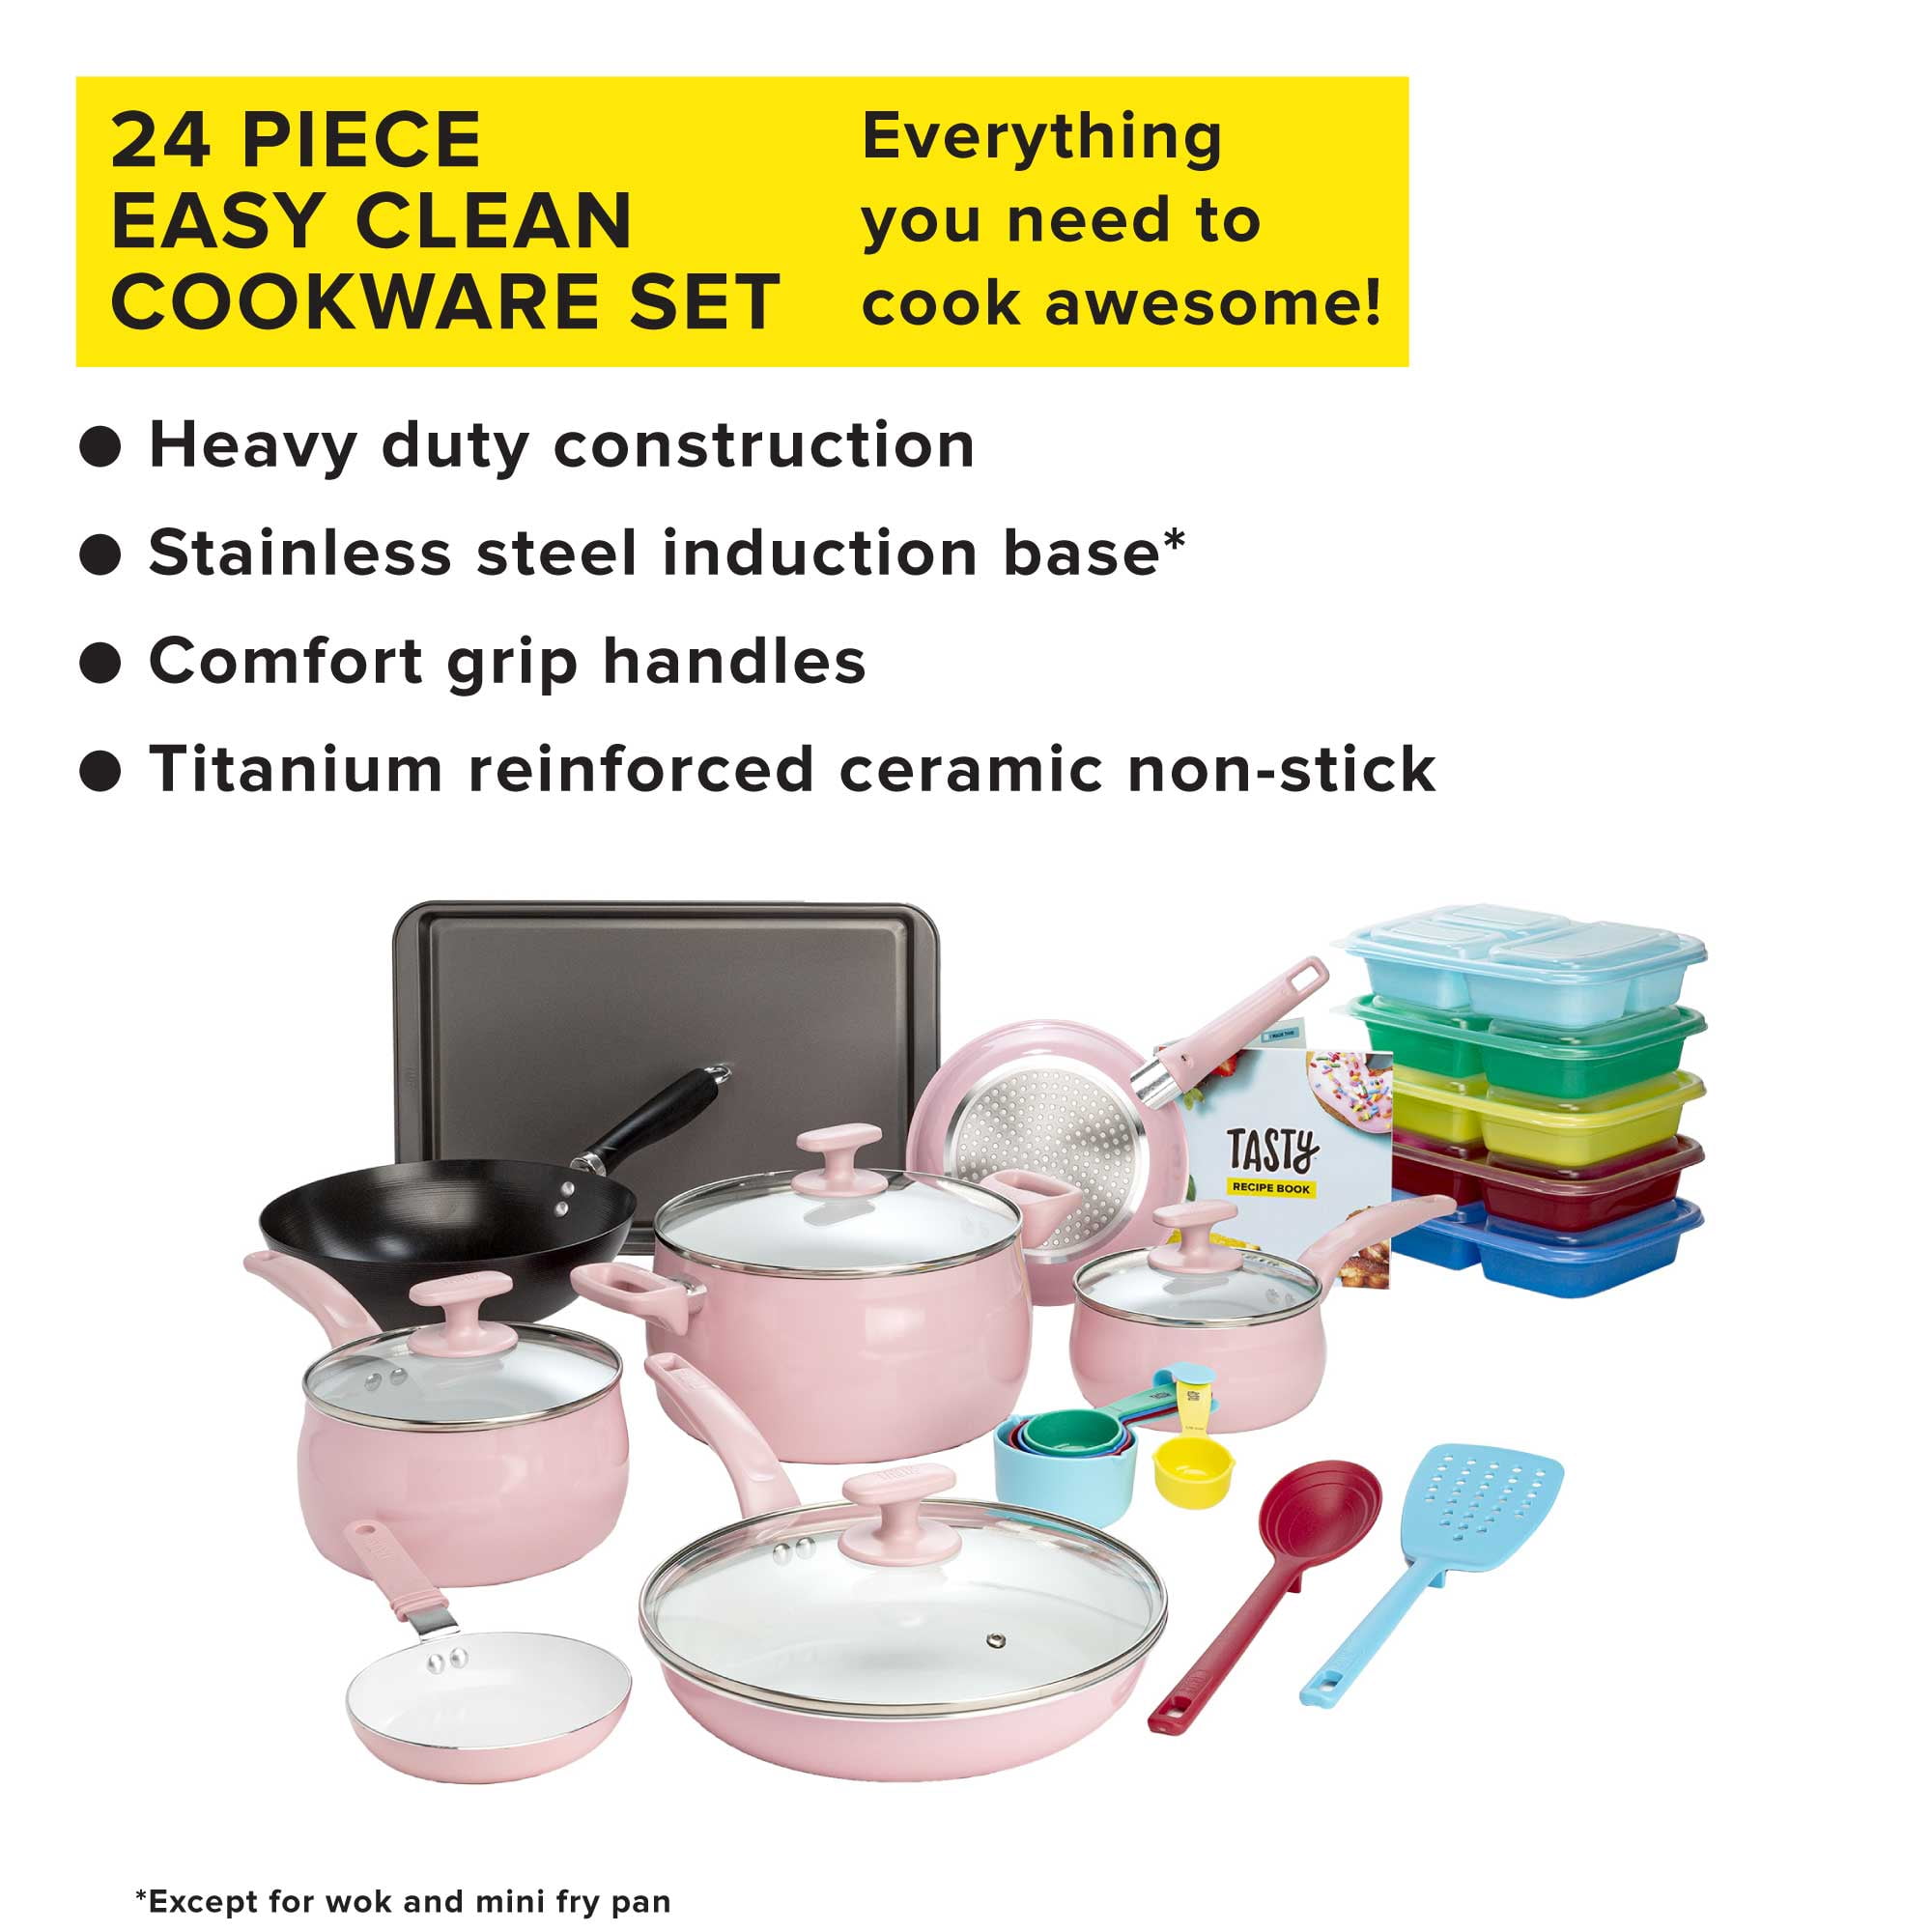 Tasty 24 Piece Titanium Ceramic Non-Stick Cookware Set, Dishwasher Safe,  Red 